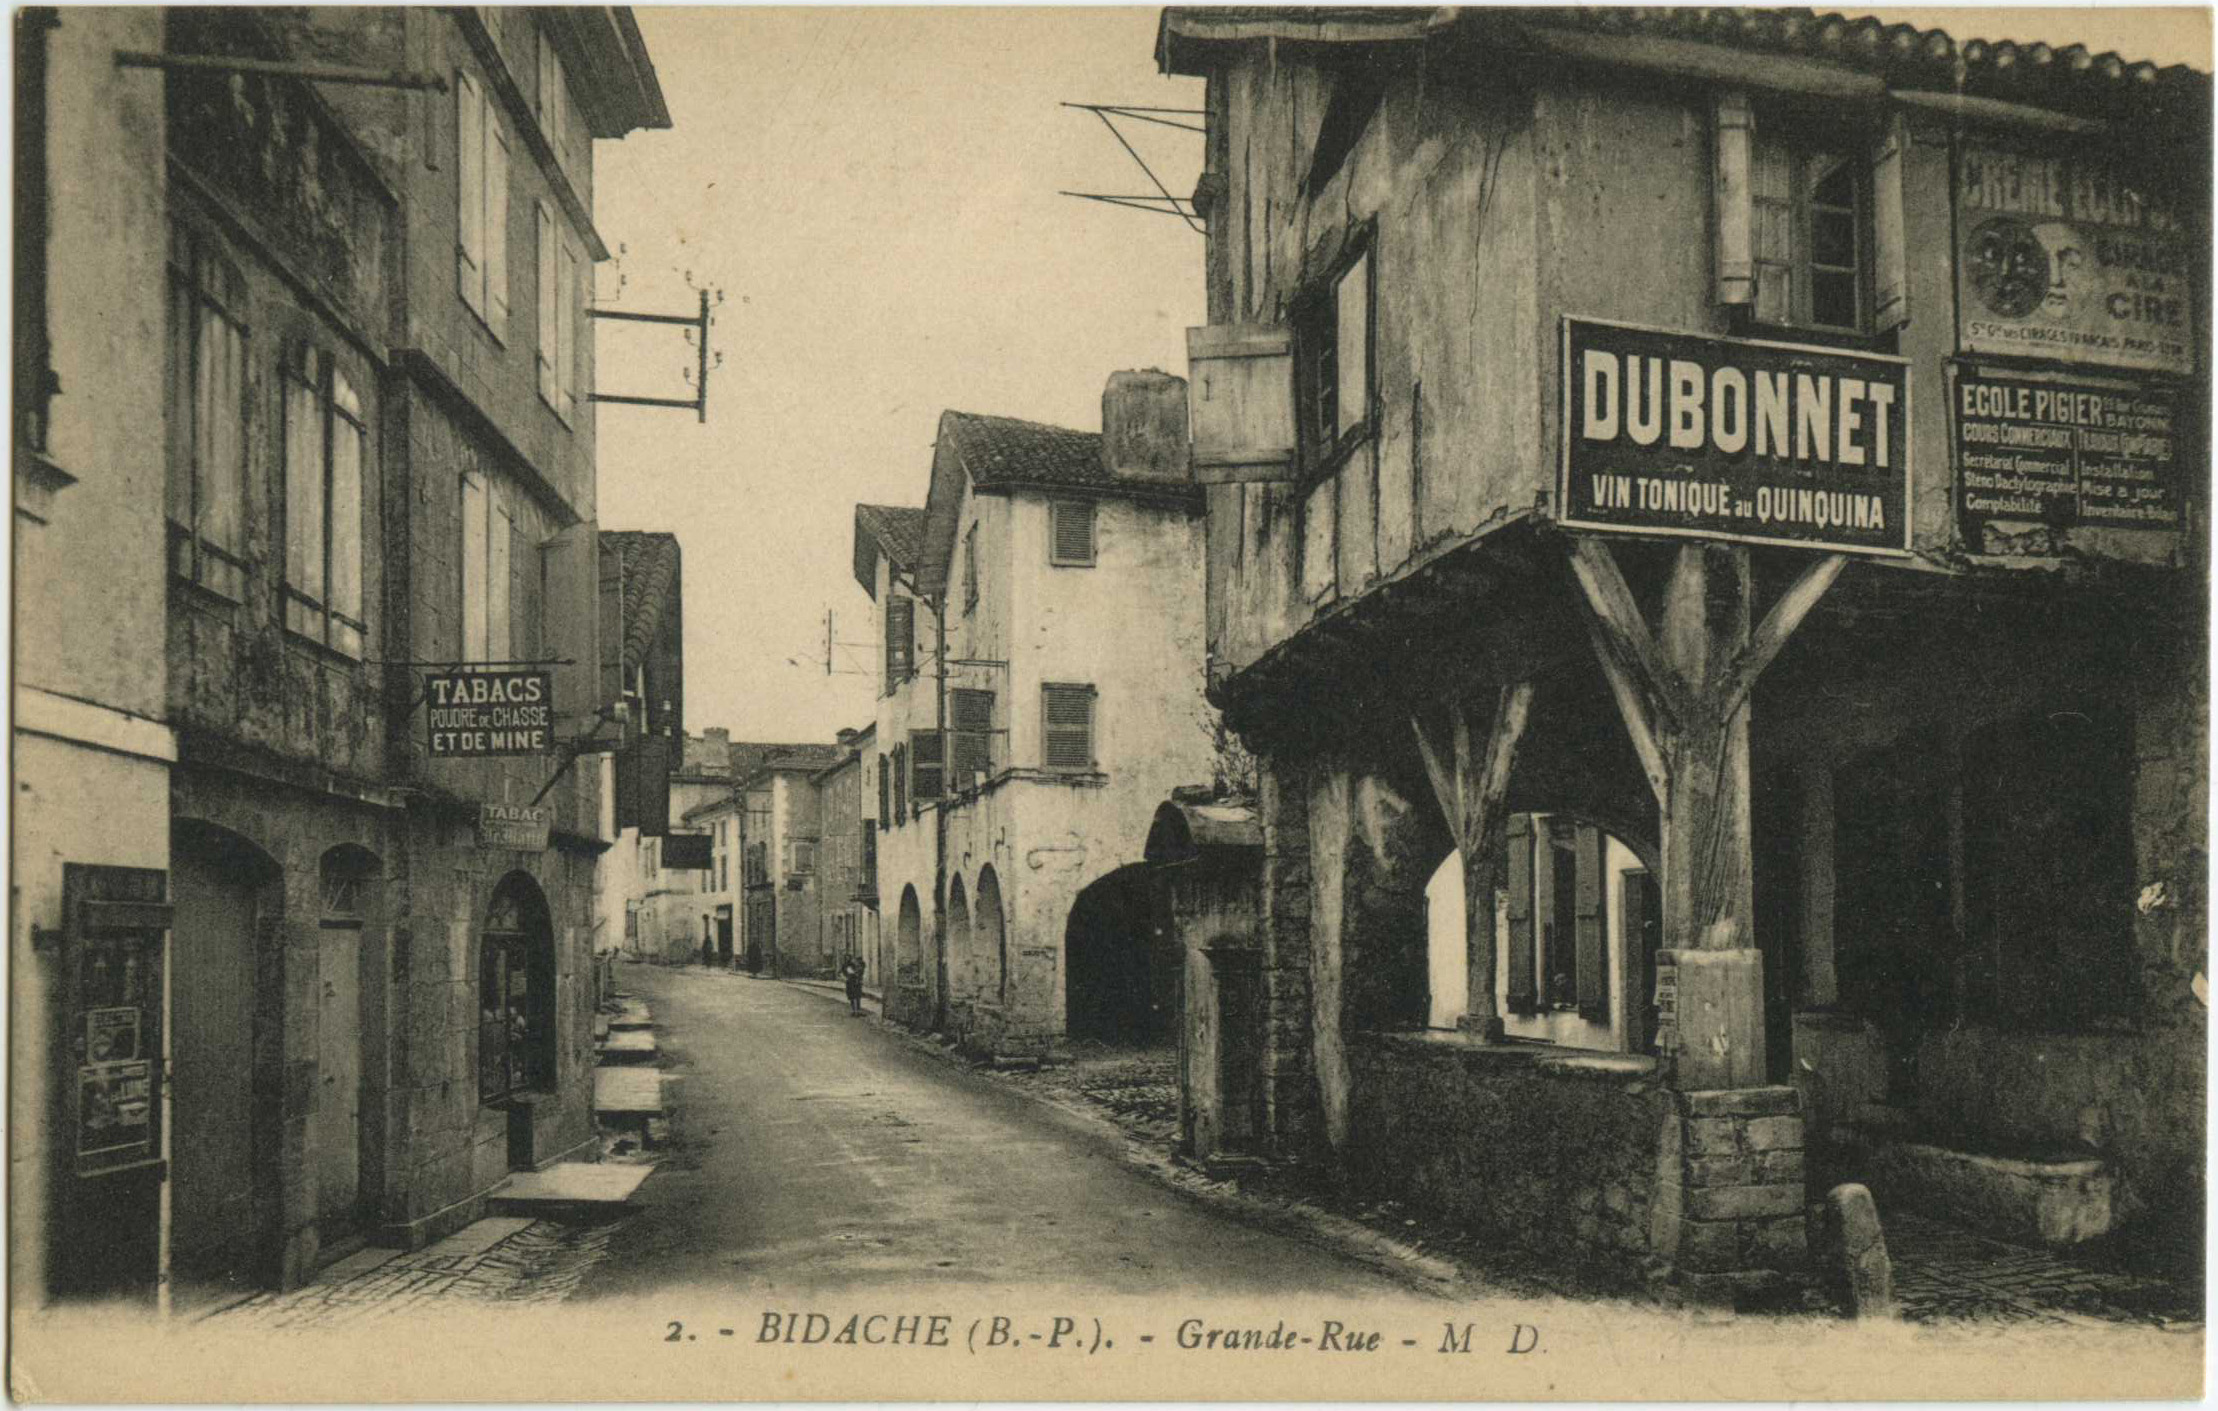 Bidache - Grande-Rue